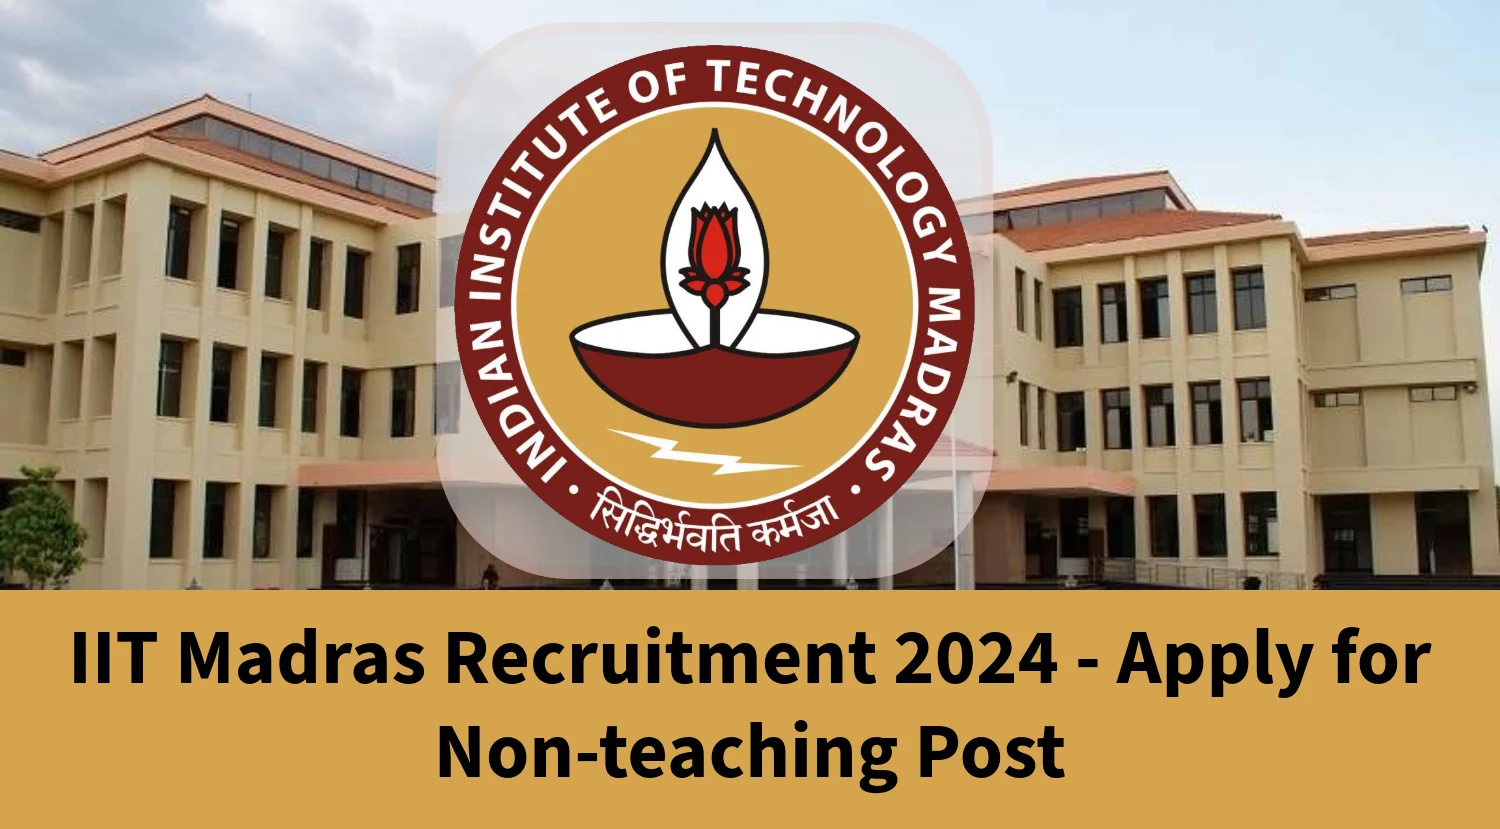 IIT Madras Recruitment 2024 - Apply for Non-teaching Post